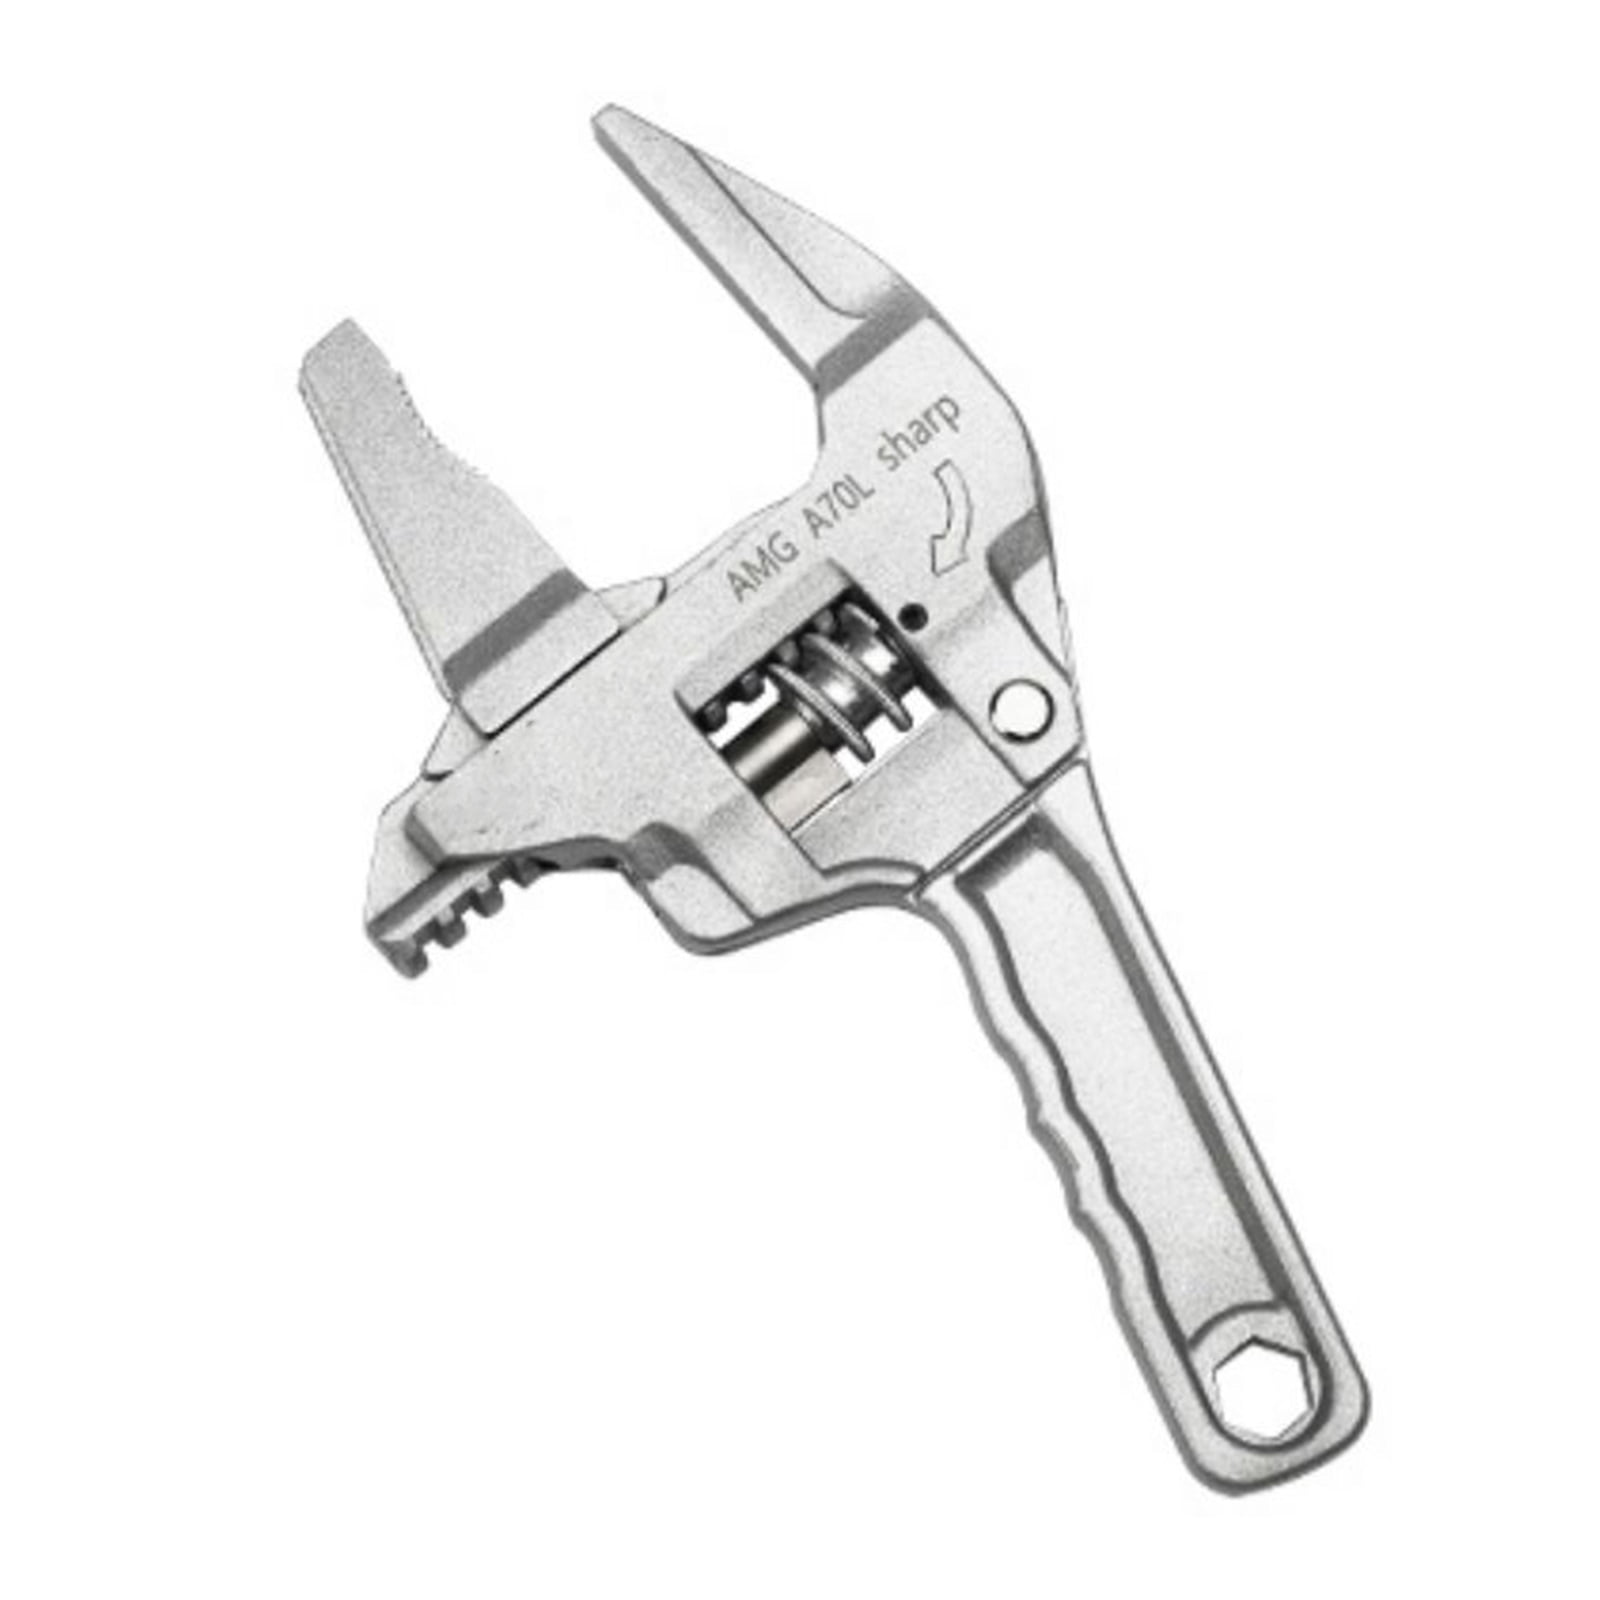 Mini Cross Wrench Socket Home Universal Aluminum Alloy Spanner Model Hand Tools 